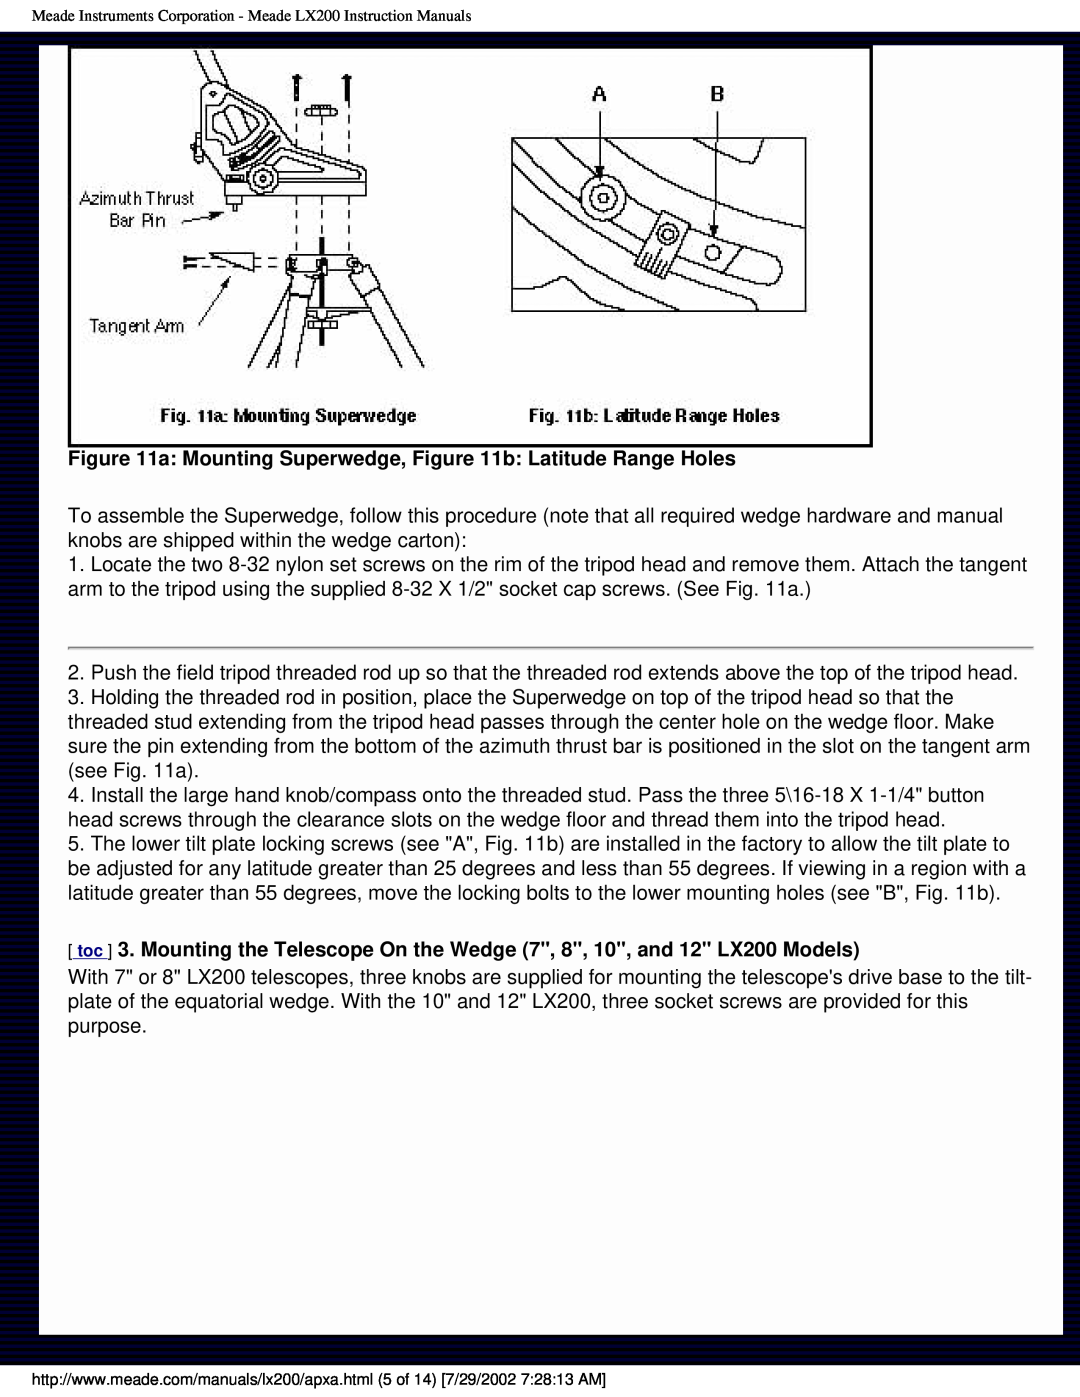 Meade LX200 instruction manual a: Mounting Superwedge, b: Latitude Range Holes 